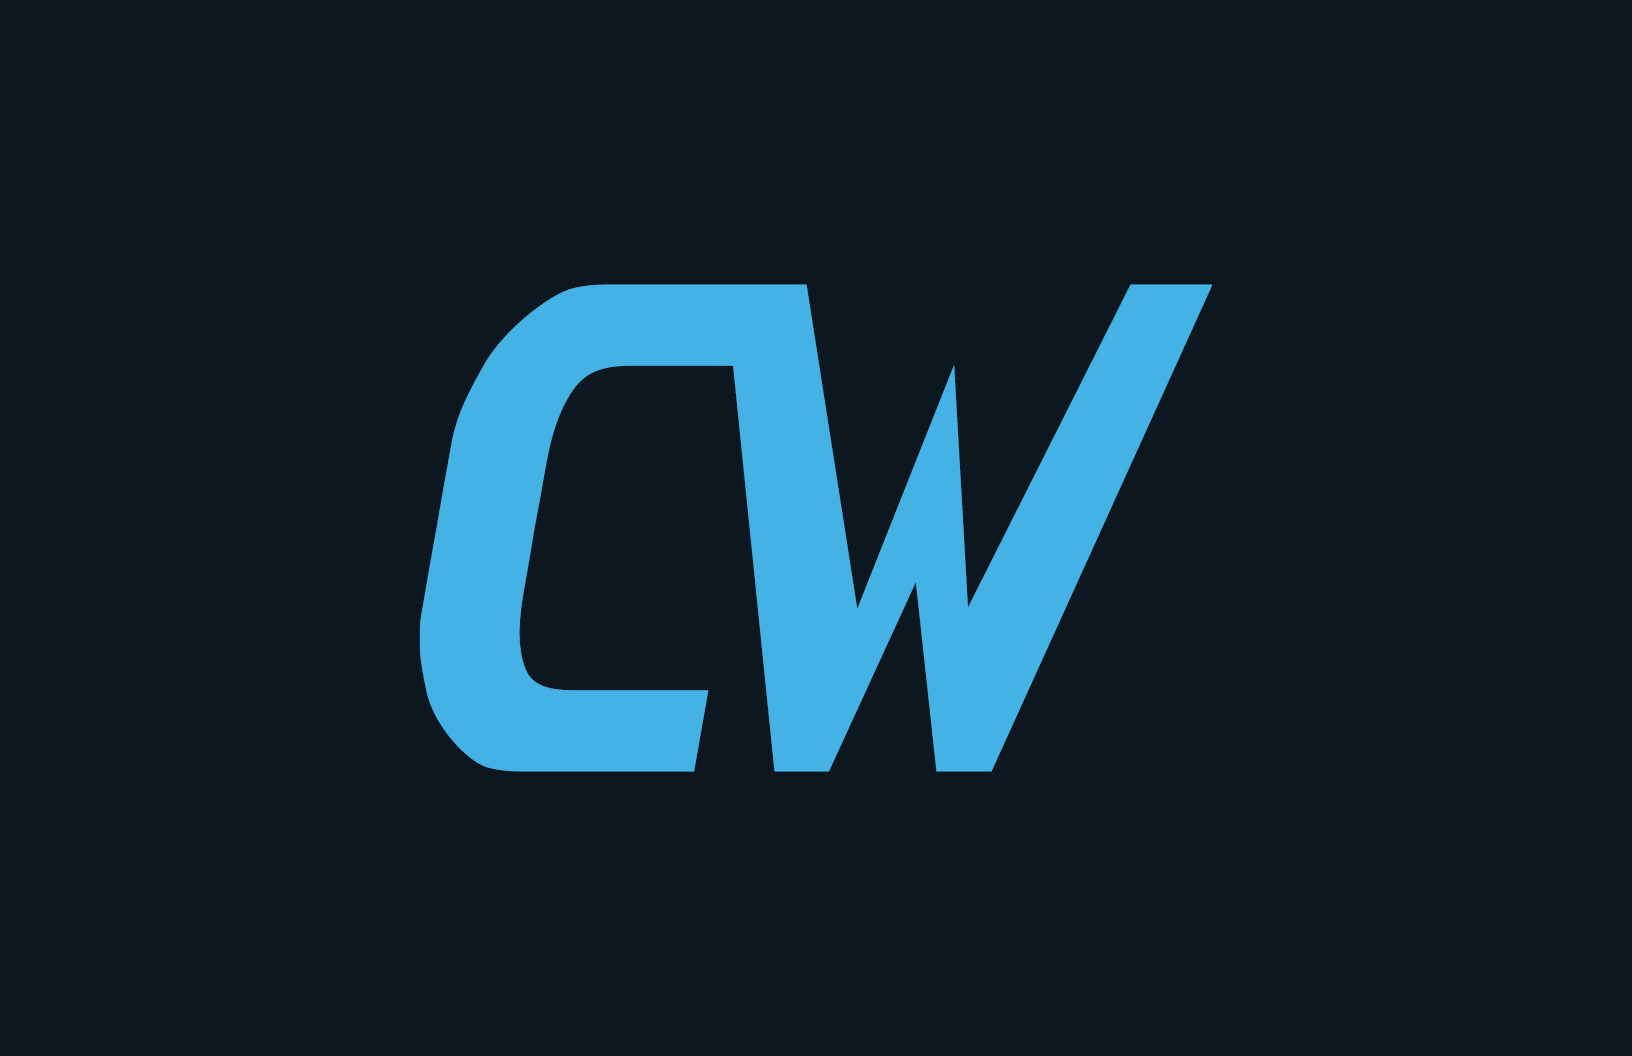 The CW Logo, image, download logo | LogoWiki.net